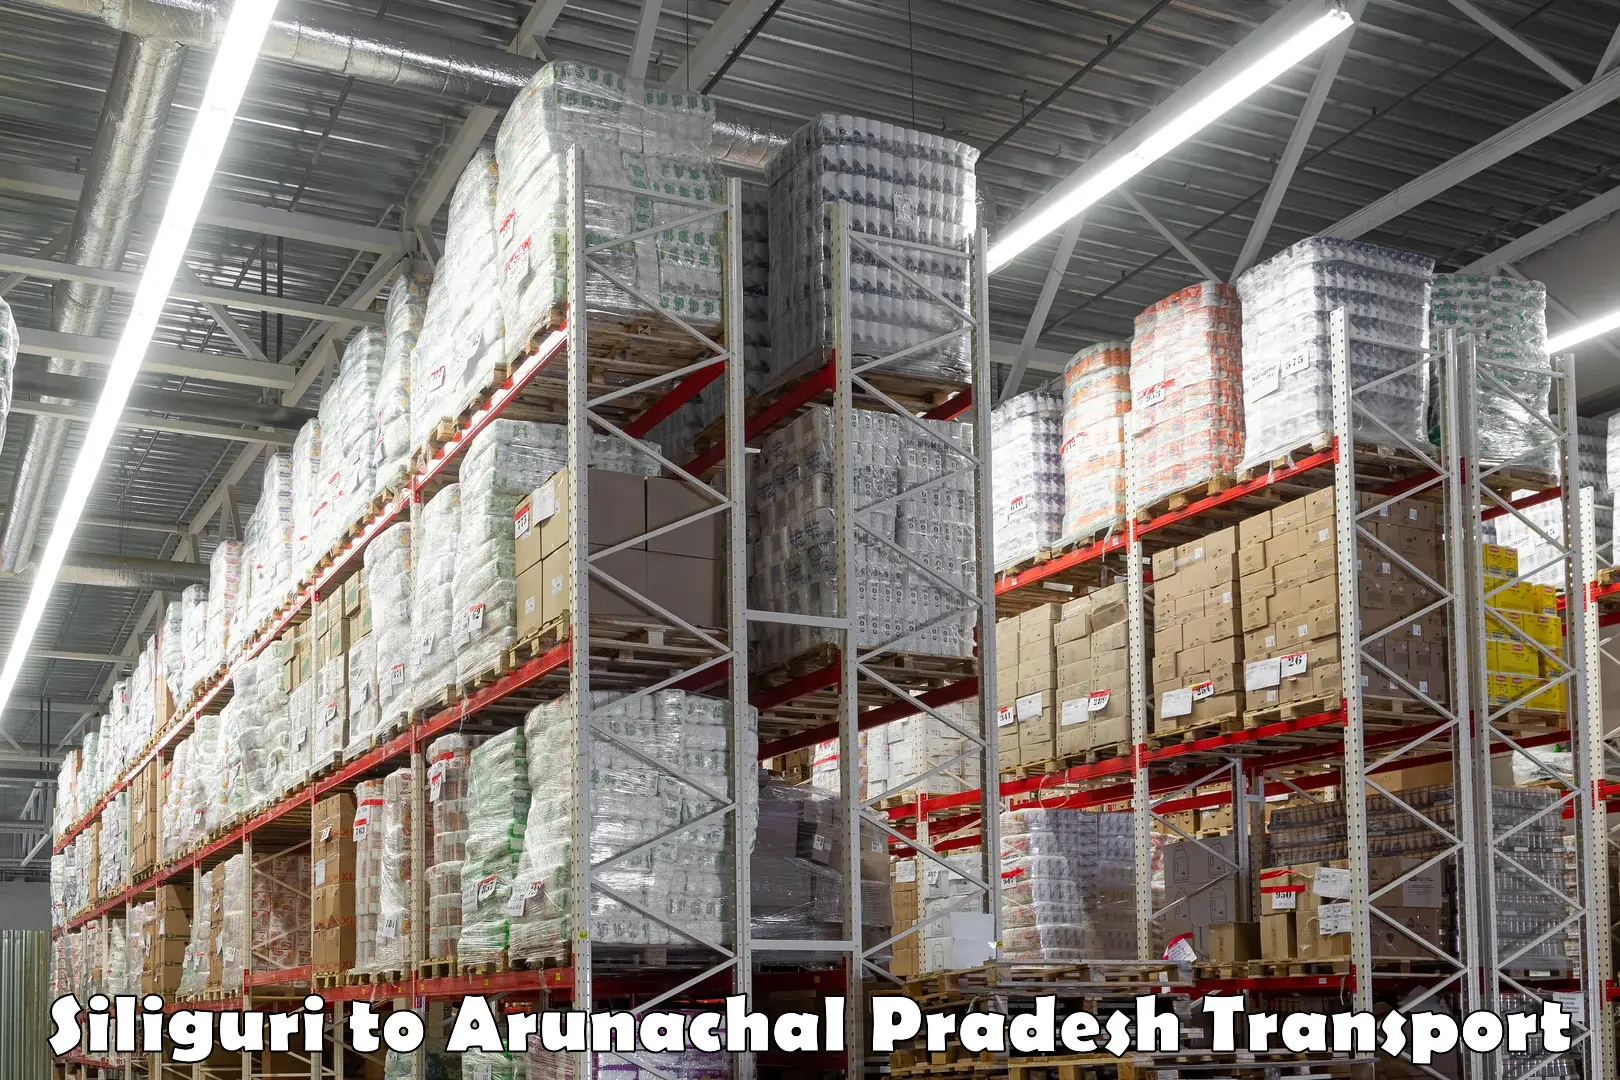 Truck transport companies in India in Siliguri to Lohit